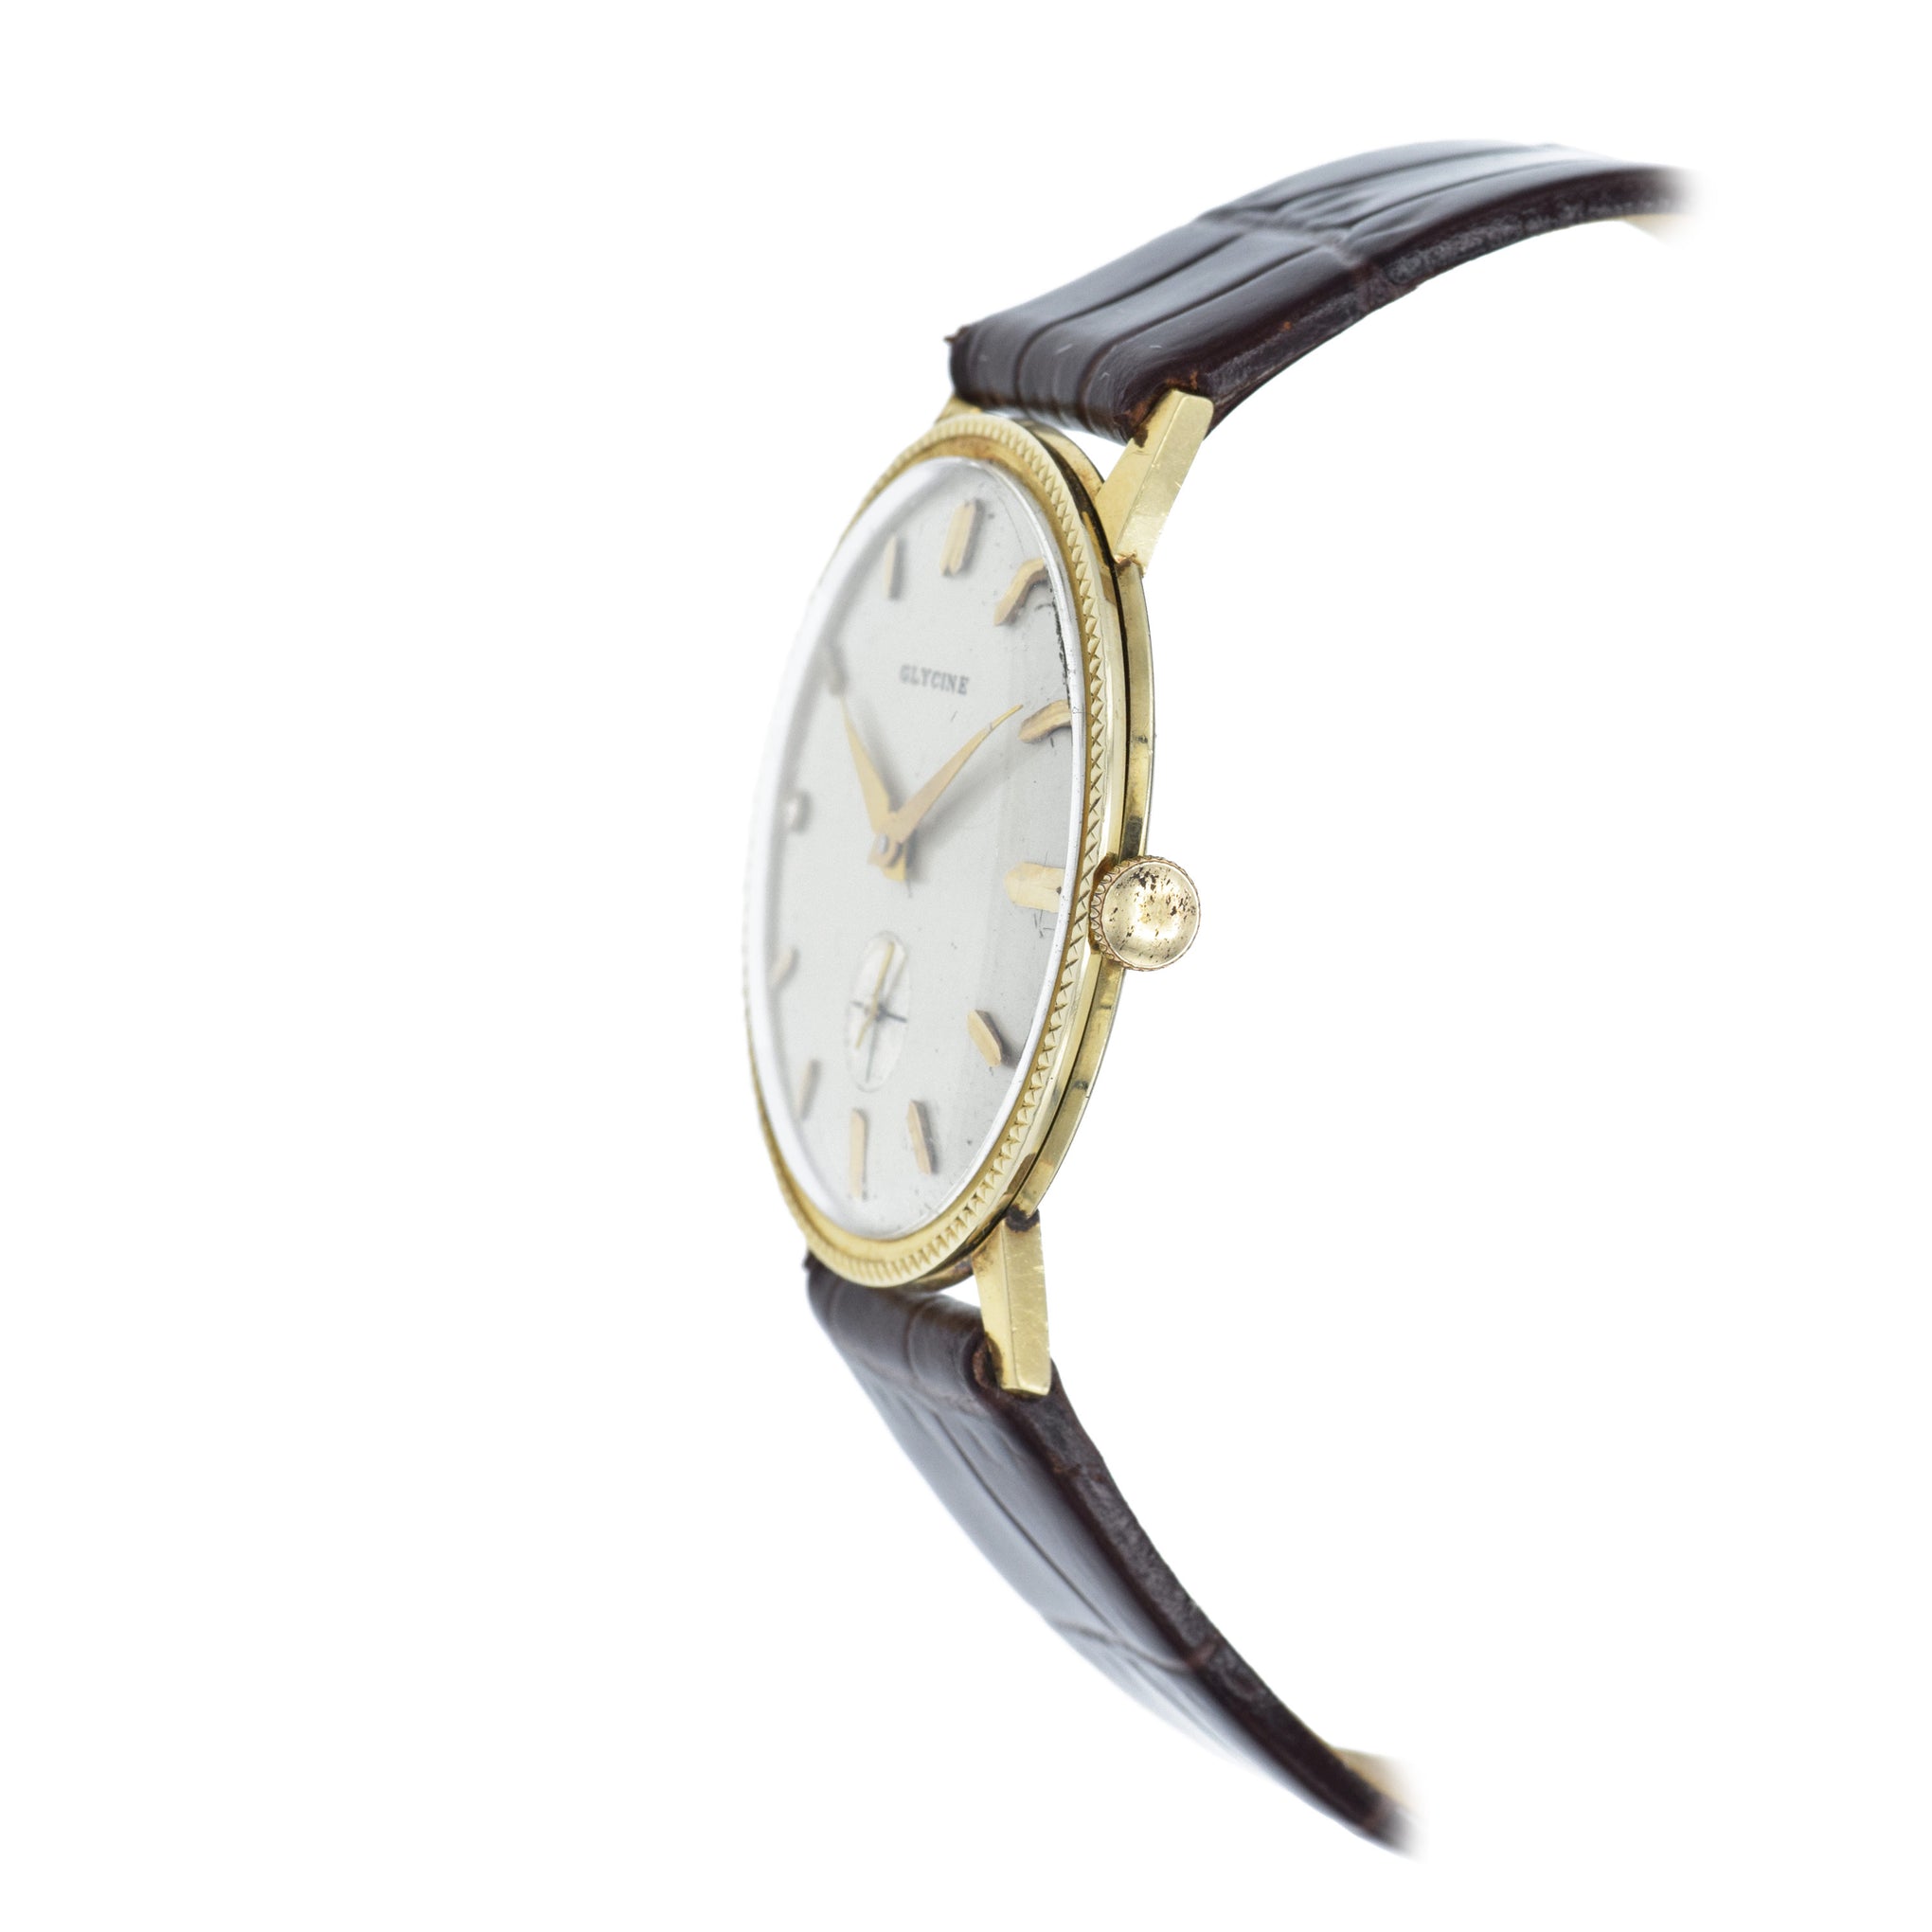 Vintage 1950s Glycine Watch